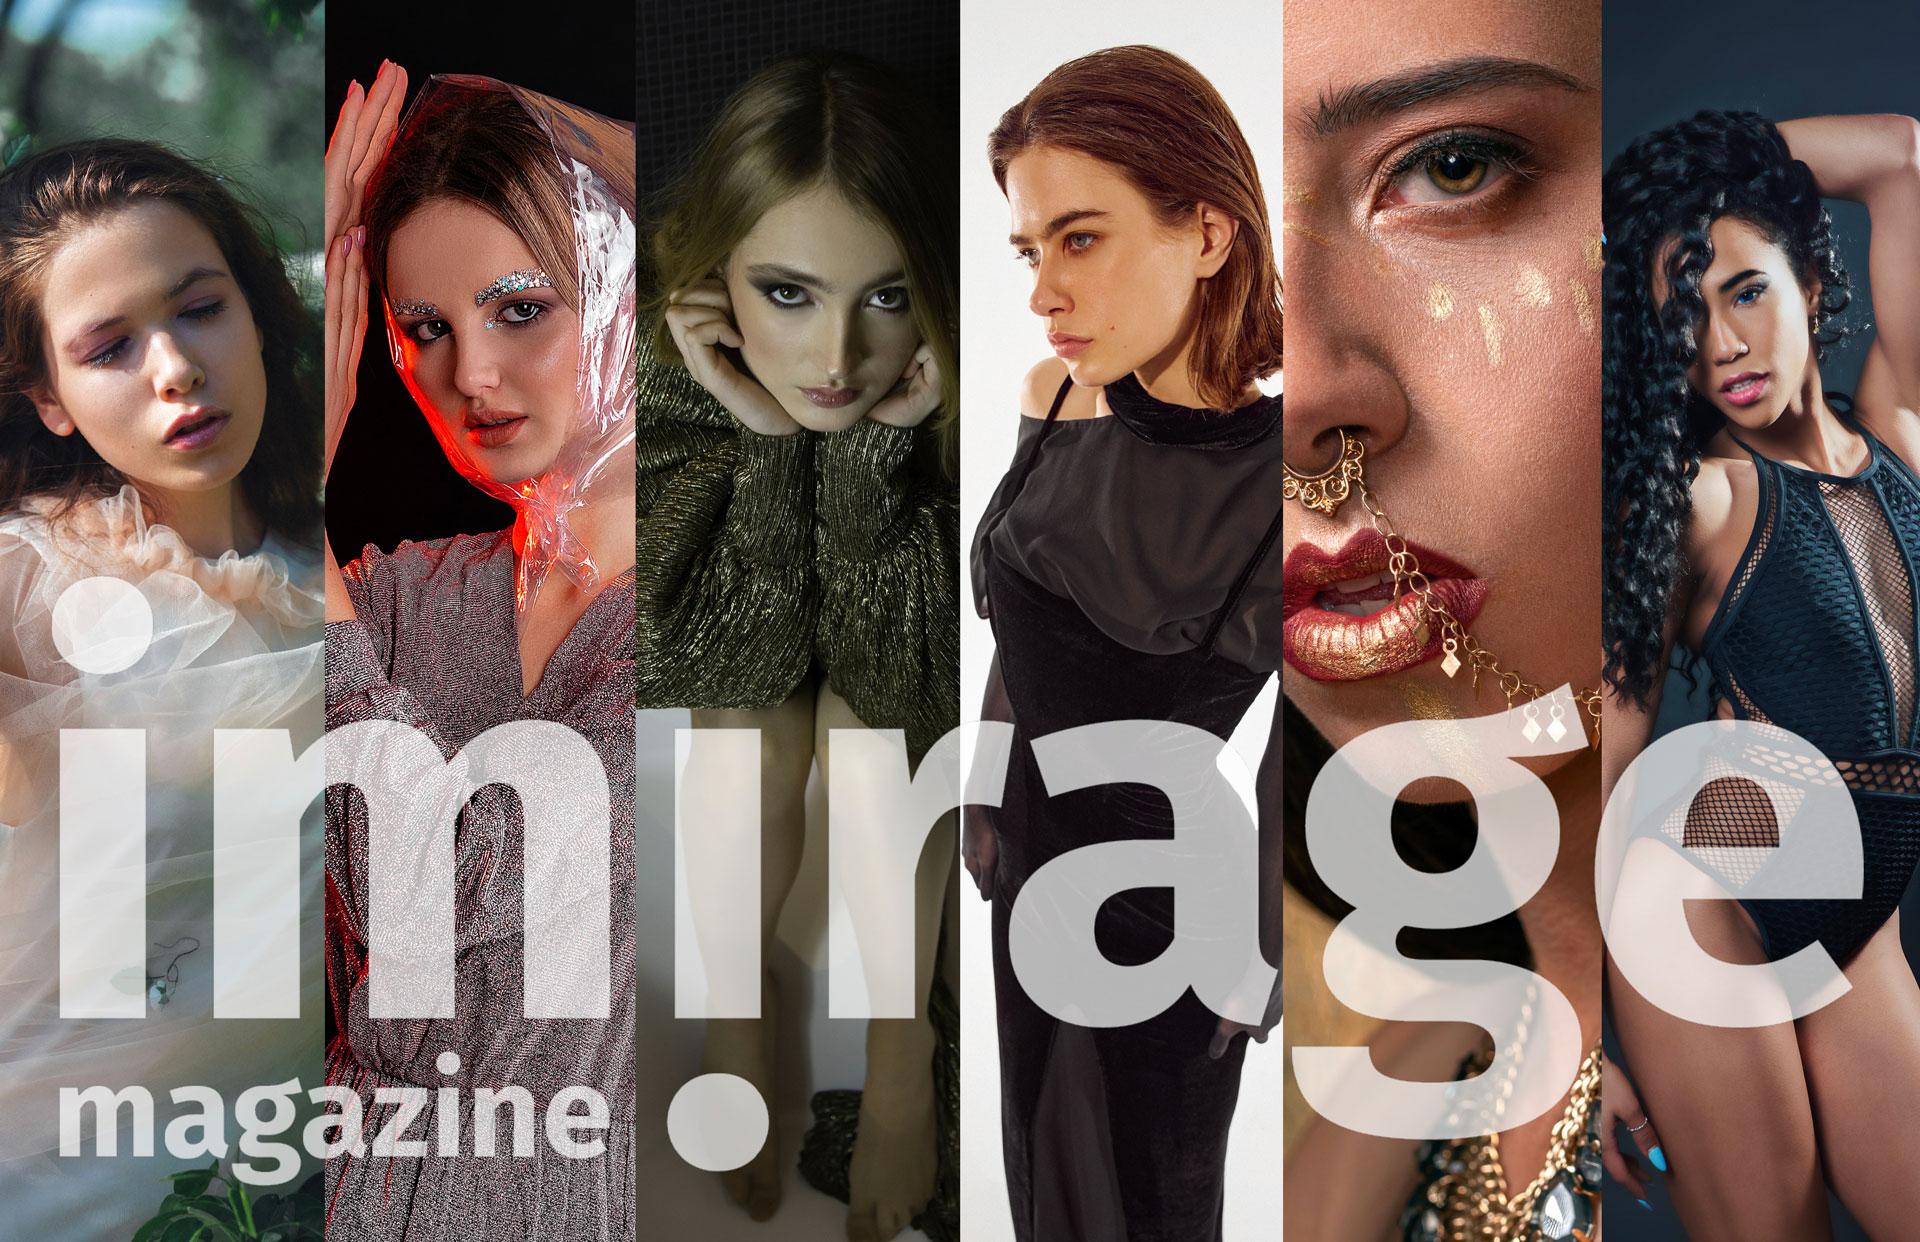 Imirage Magazine Spiraling out